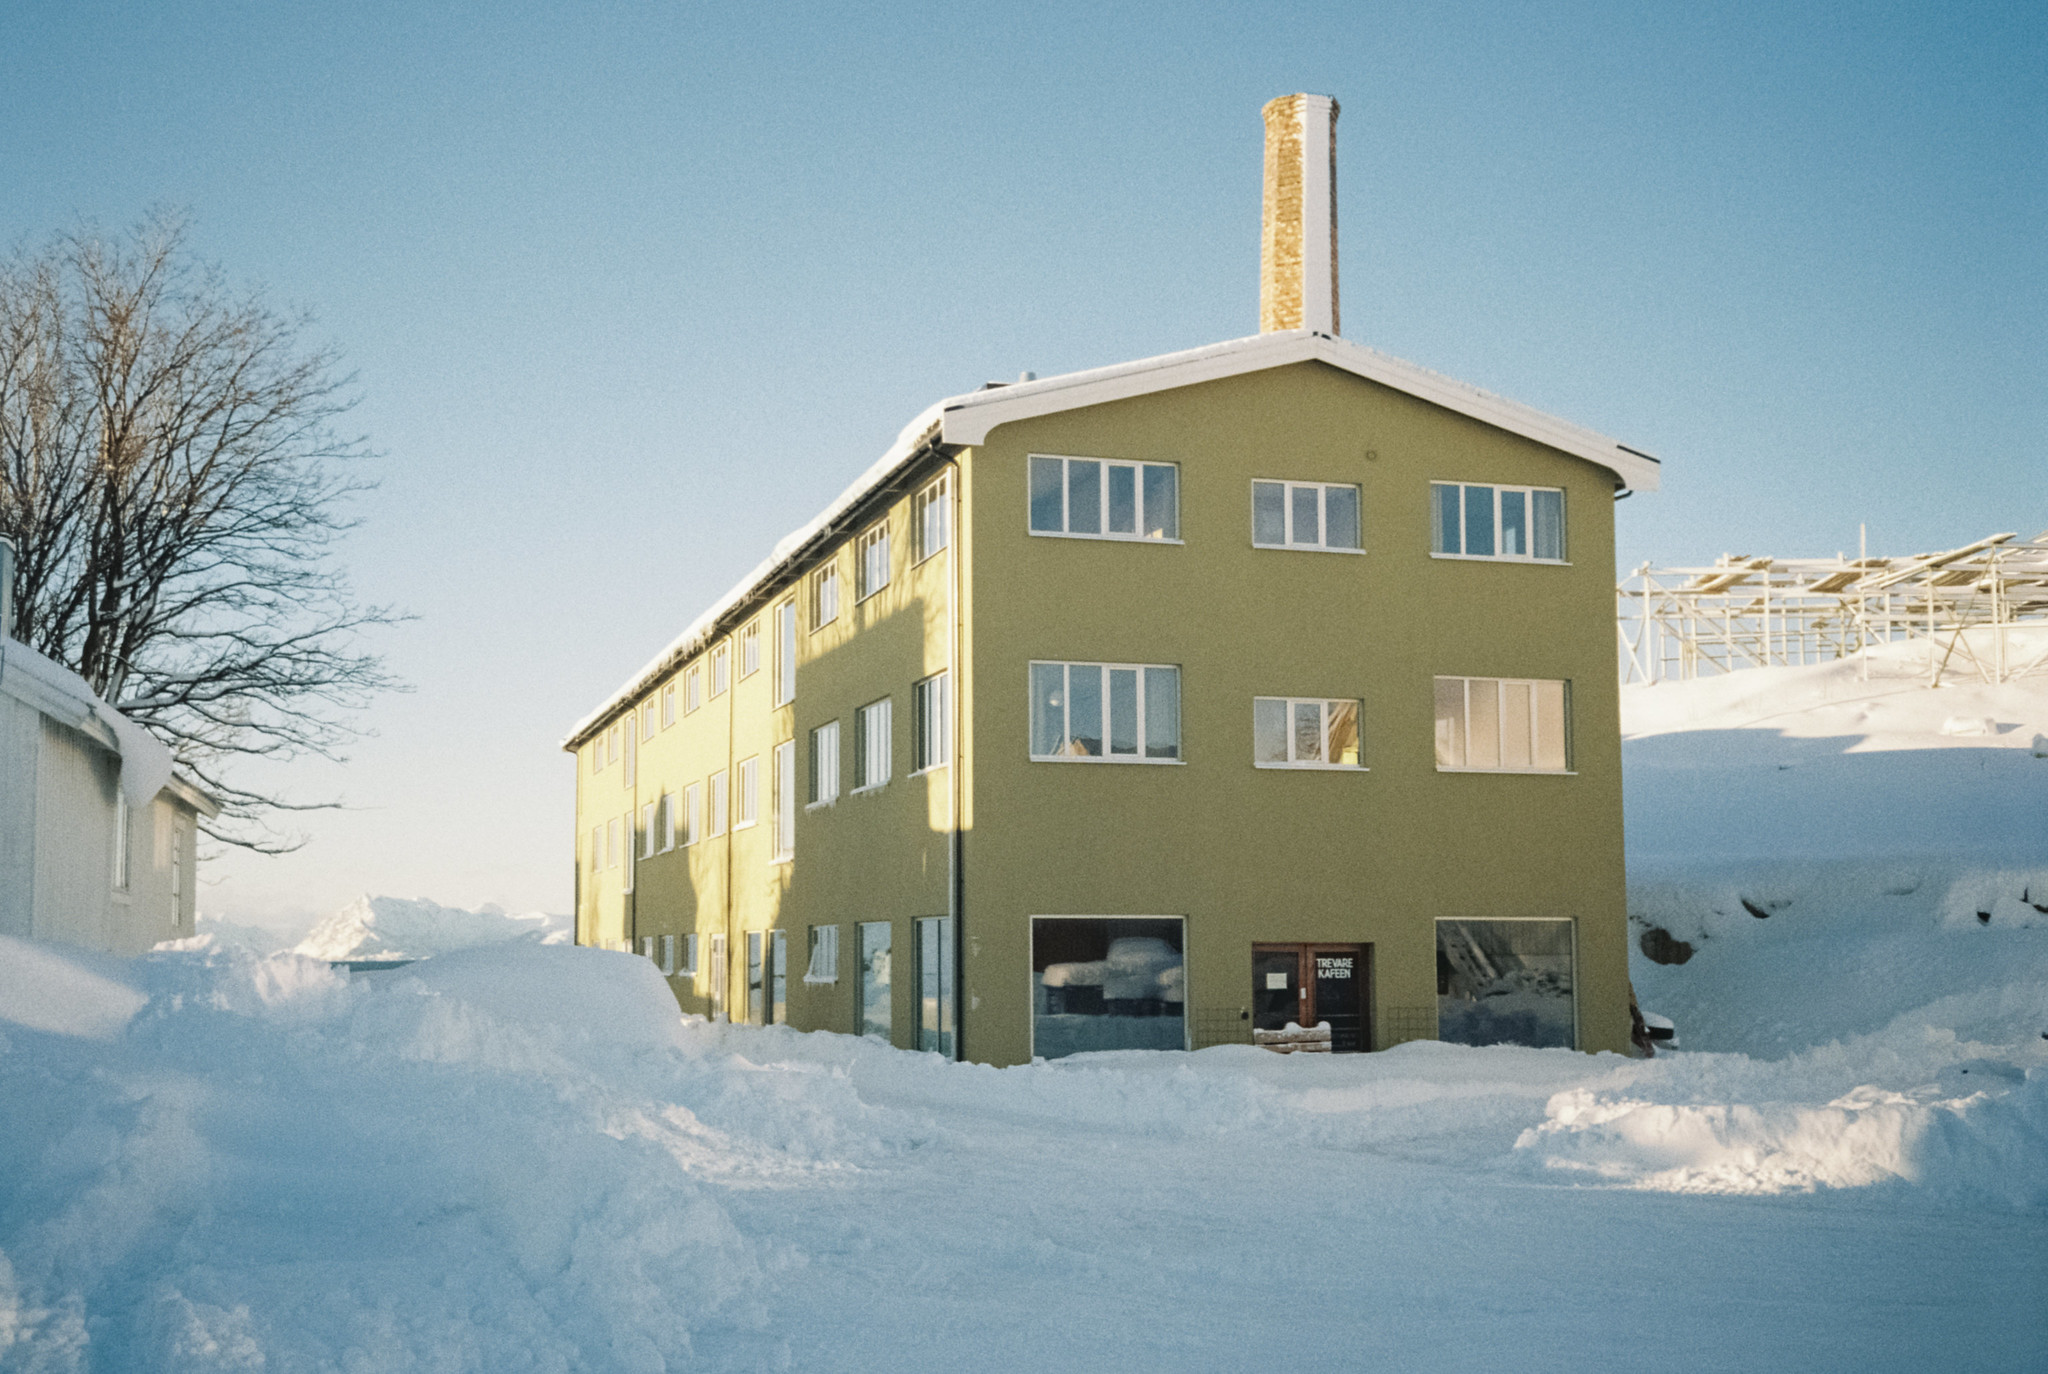 Trevarefabrikken in winter sun and snow